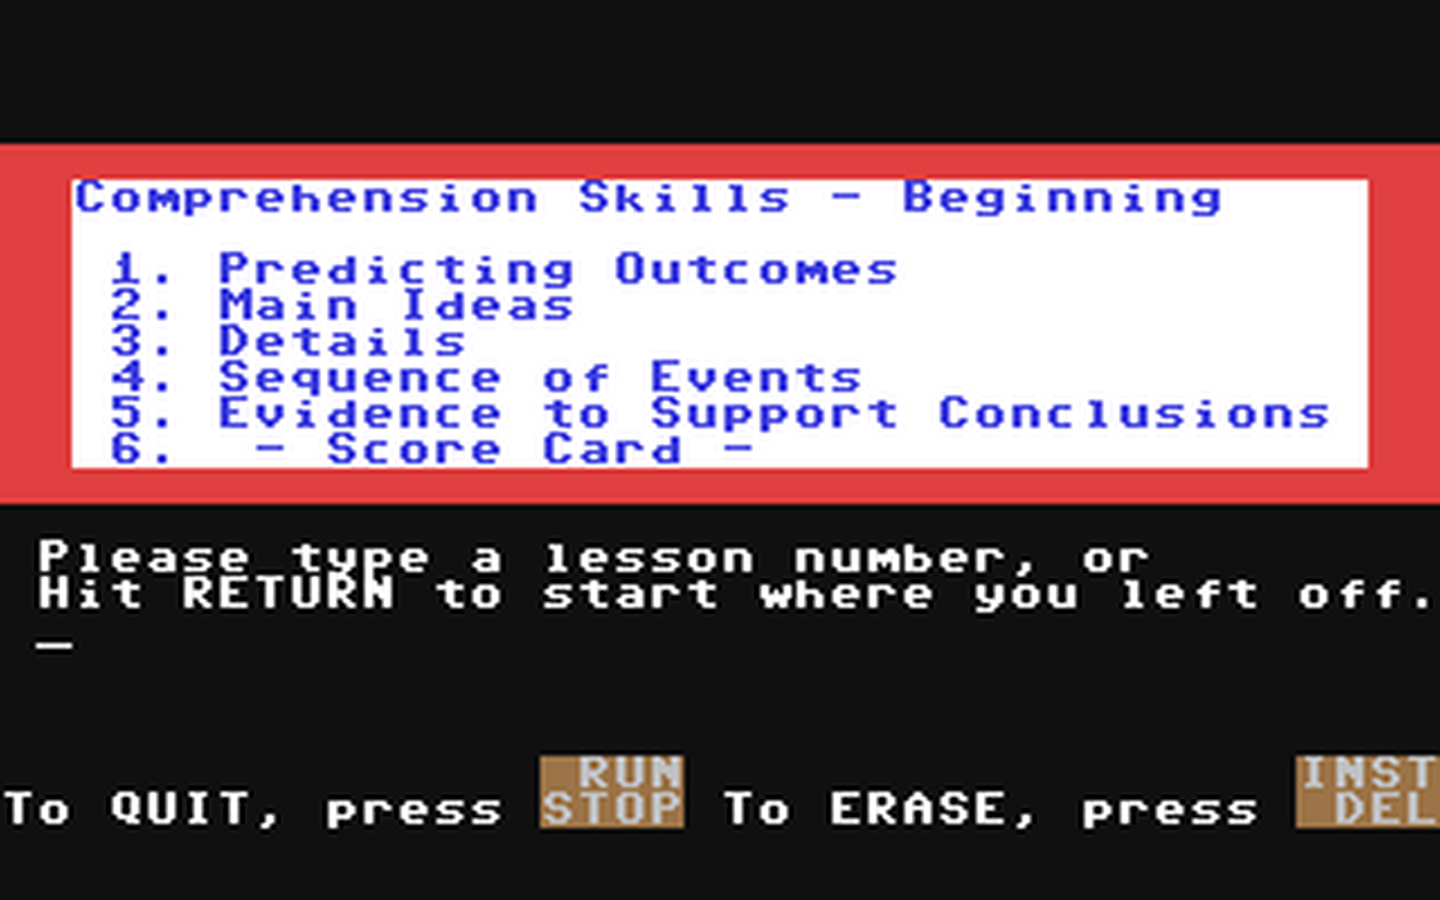 C64 GameBase EasyReader_-_Reading_Comprehension_Skills_1 American_Educational_Computer_(AEC) 1983